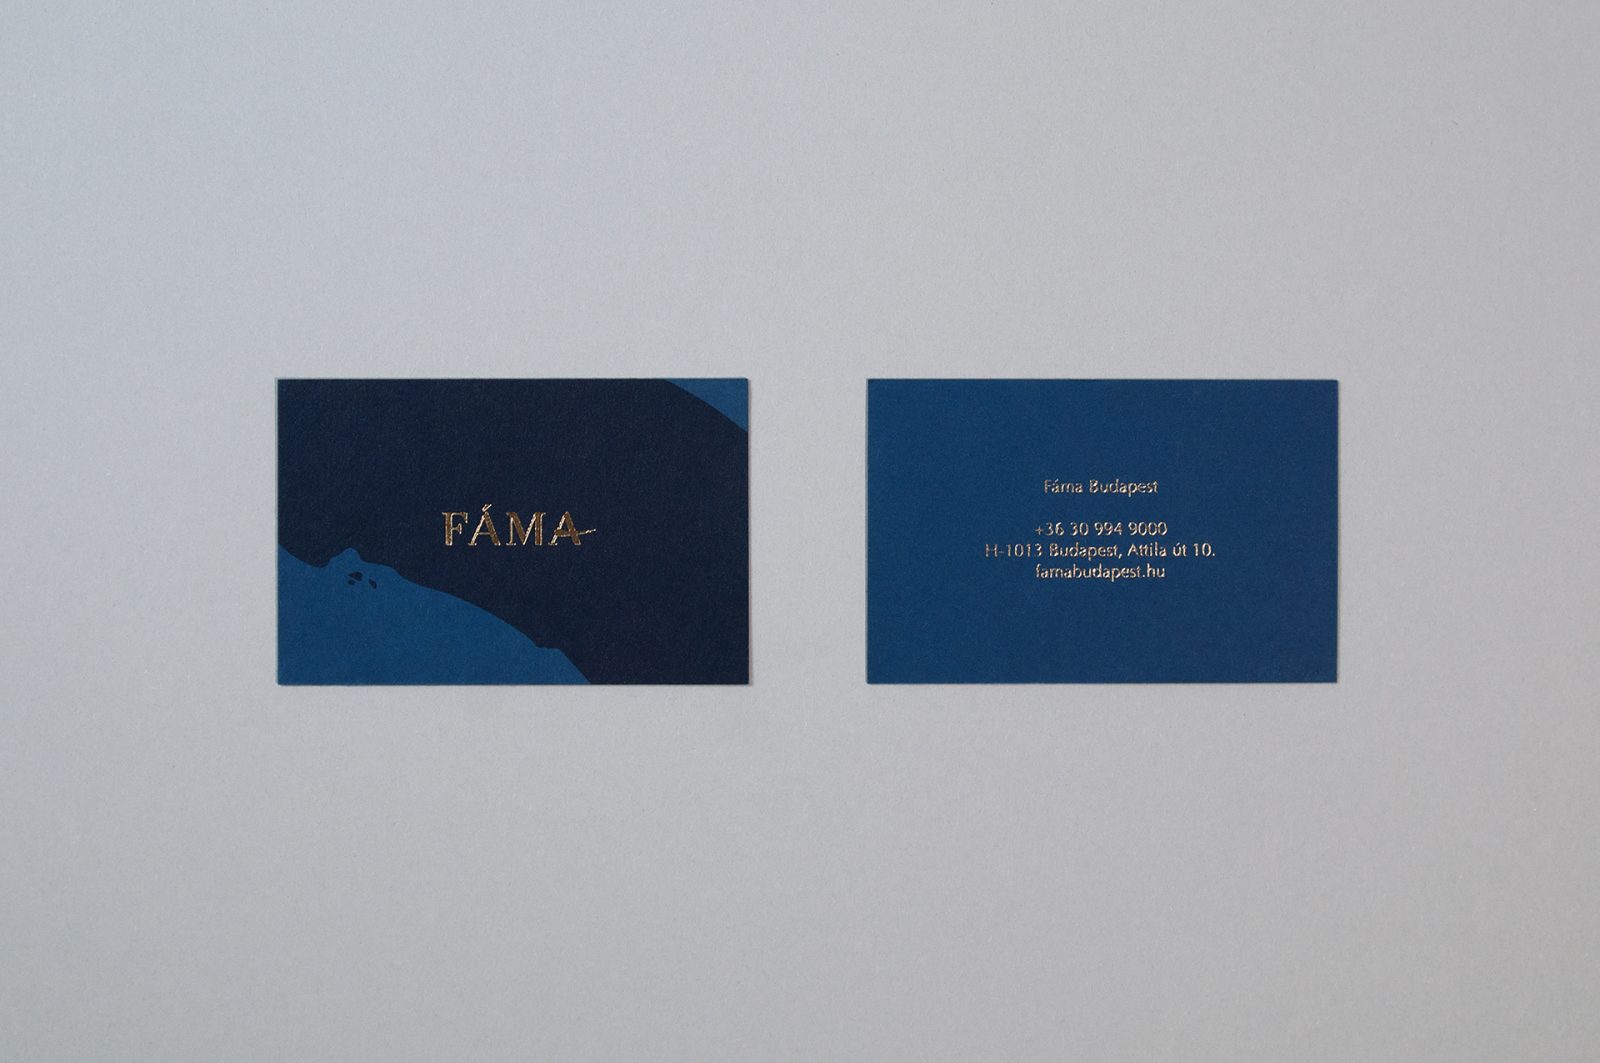 Gold Detailed Fáma Restaurant Branding by Graphasel Design Studio